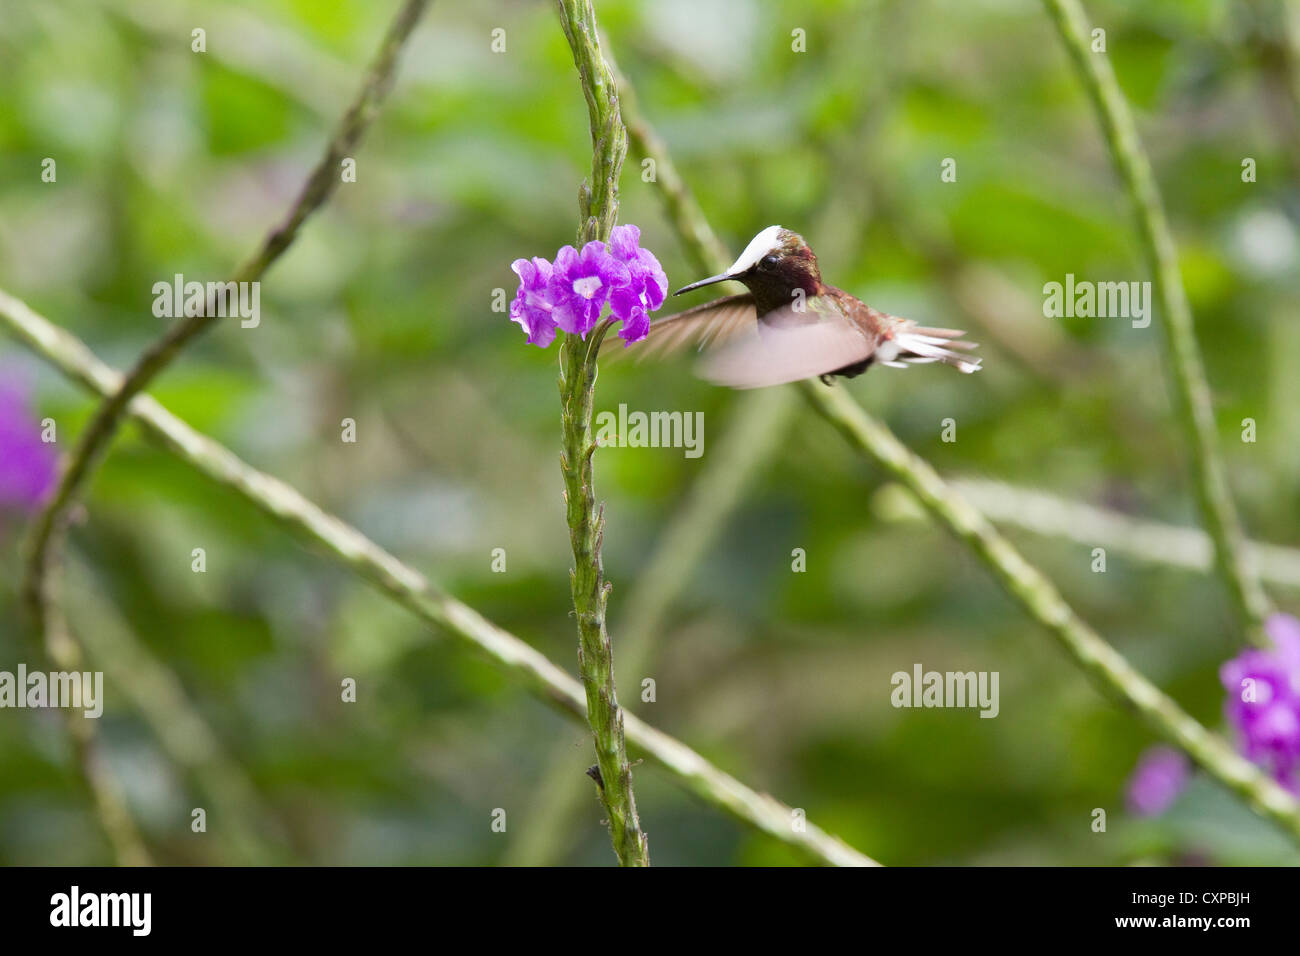 Snowcap (Microchera Albocoronata) Kolibri Fütterung auf lila Blume aus Gründen der Rancho Naturalista, Costa Rica. Stockfoto